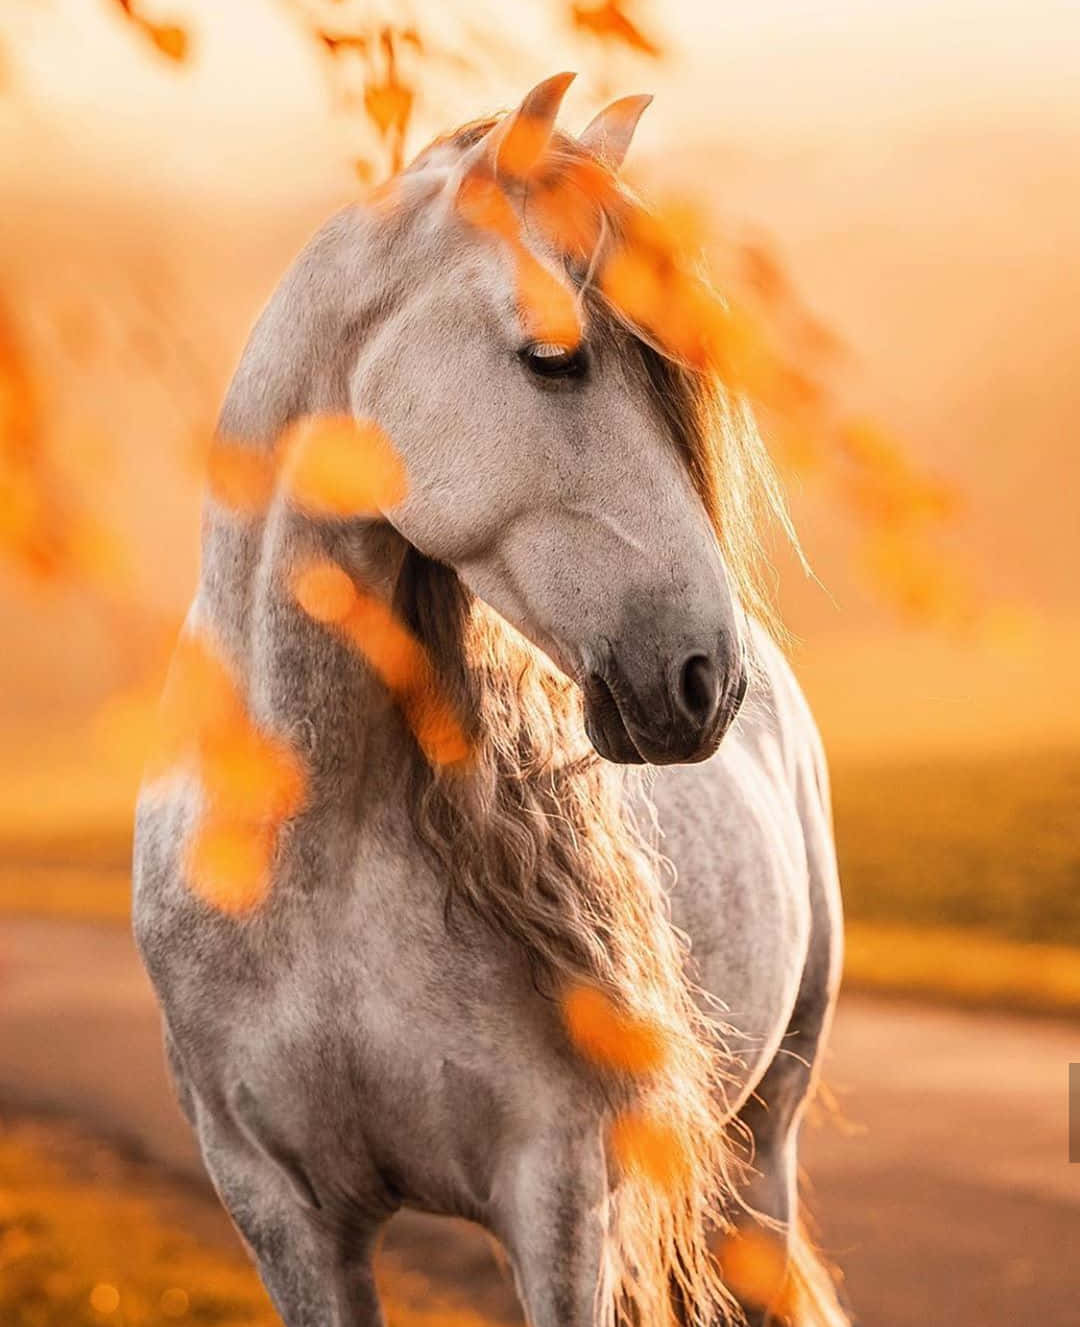 A cute, friendly horse with a beautiful white mane.